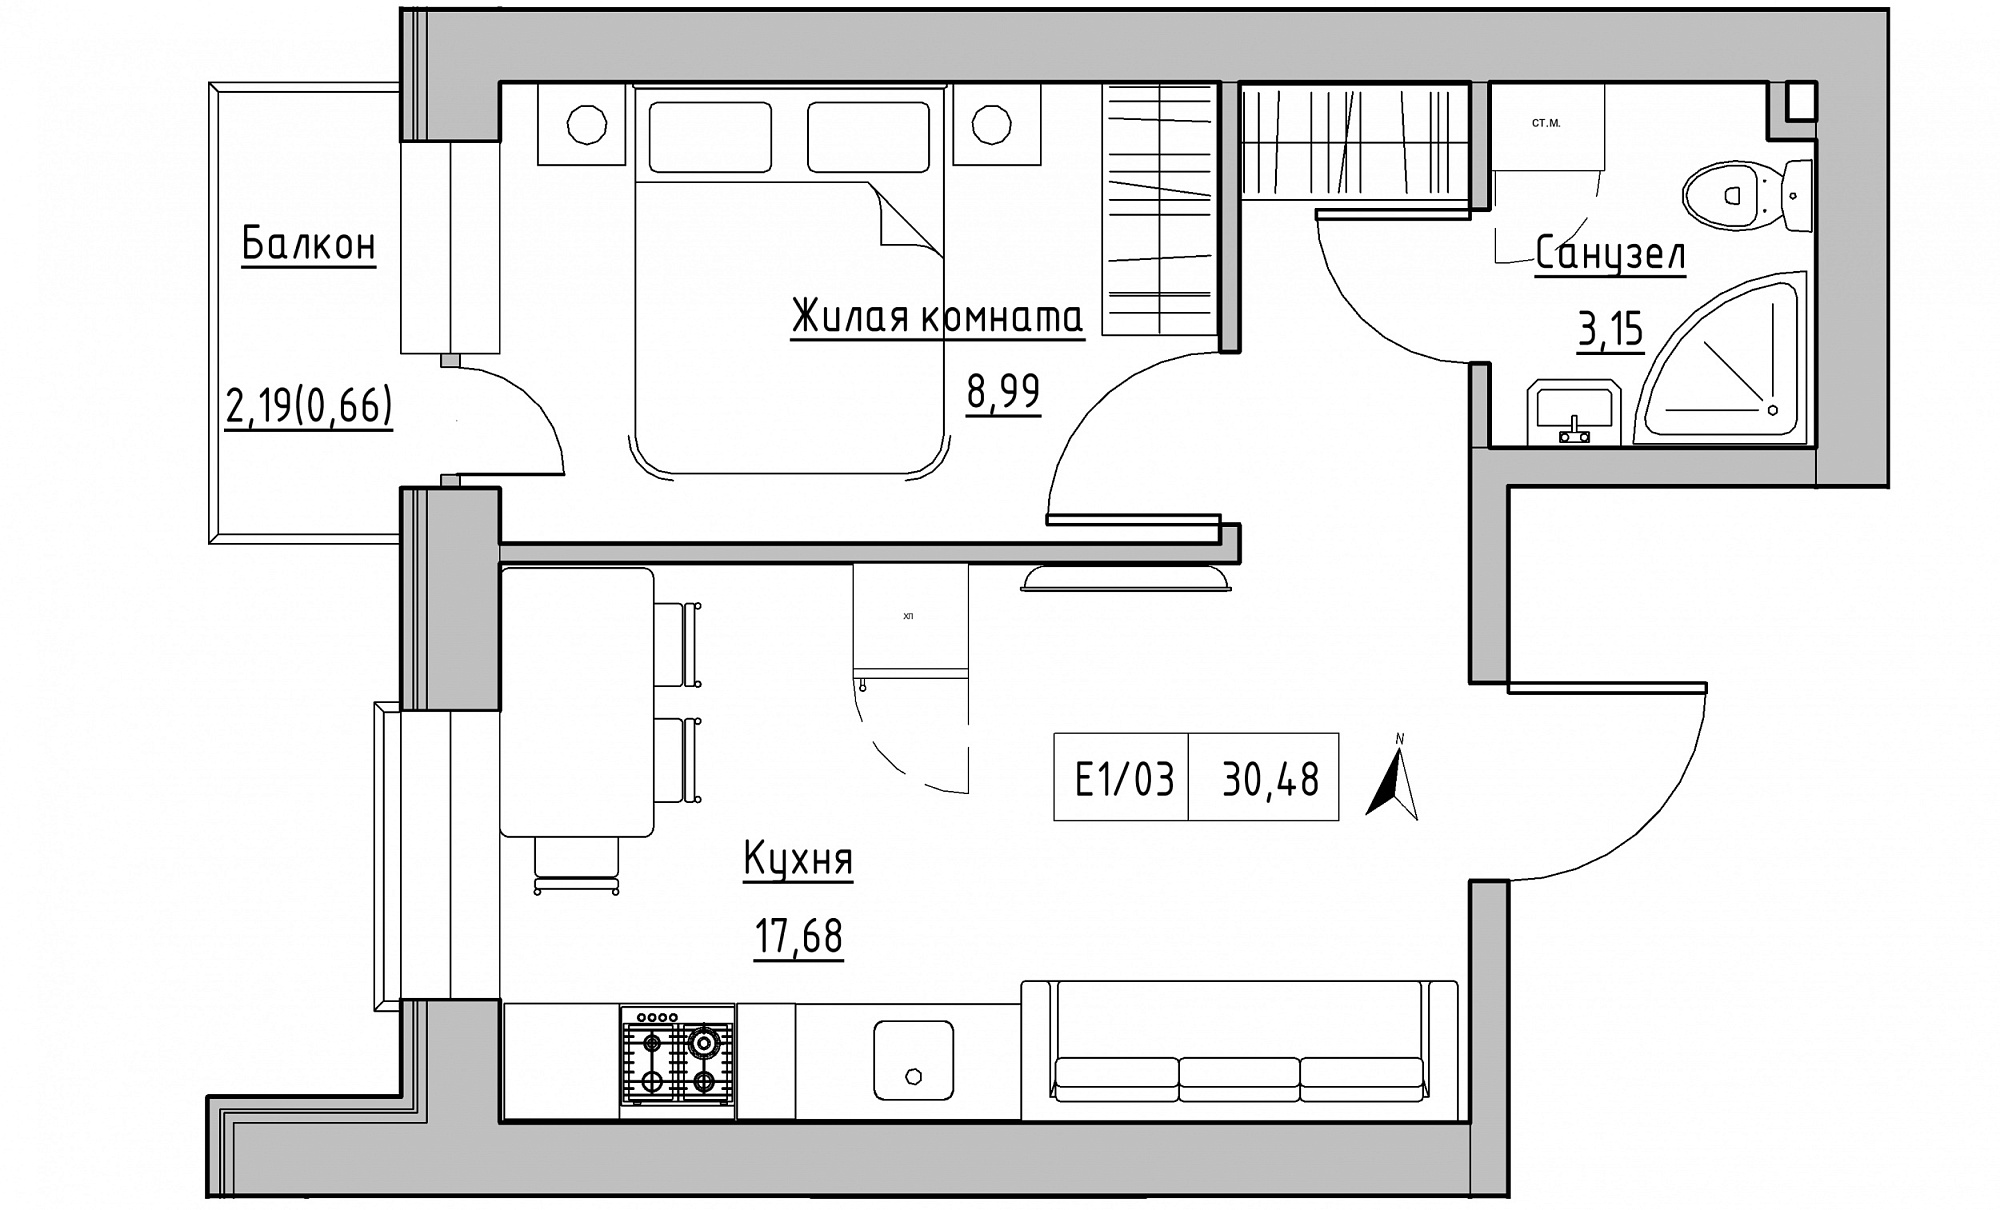 Planning 1-rm flats area 30.48m2, KS-015-02/0003.